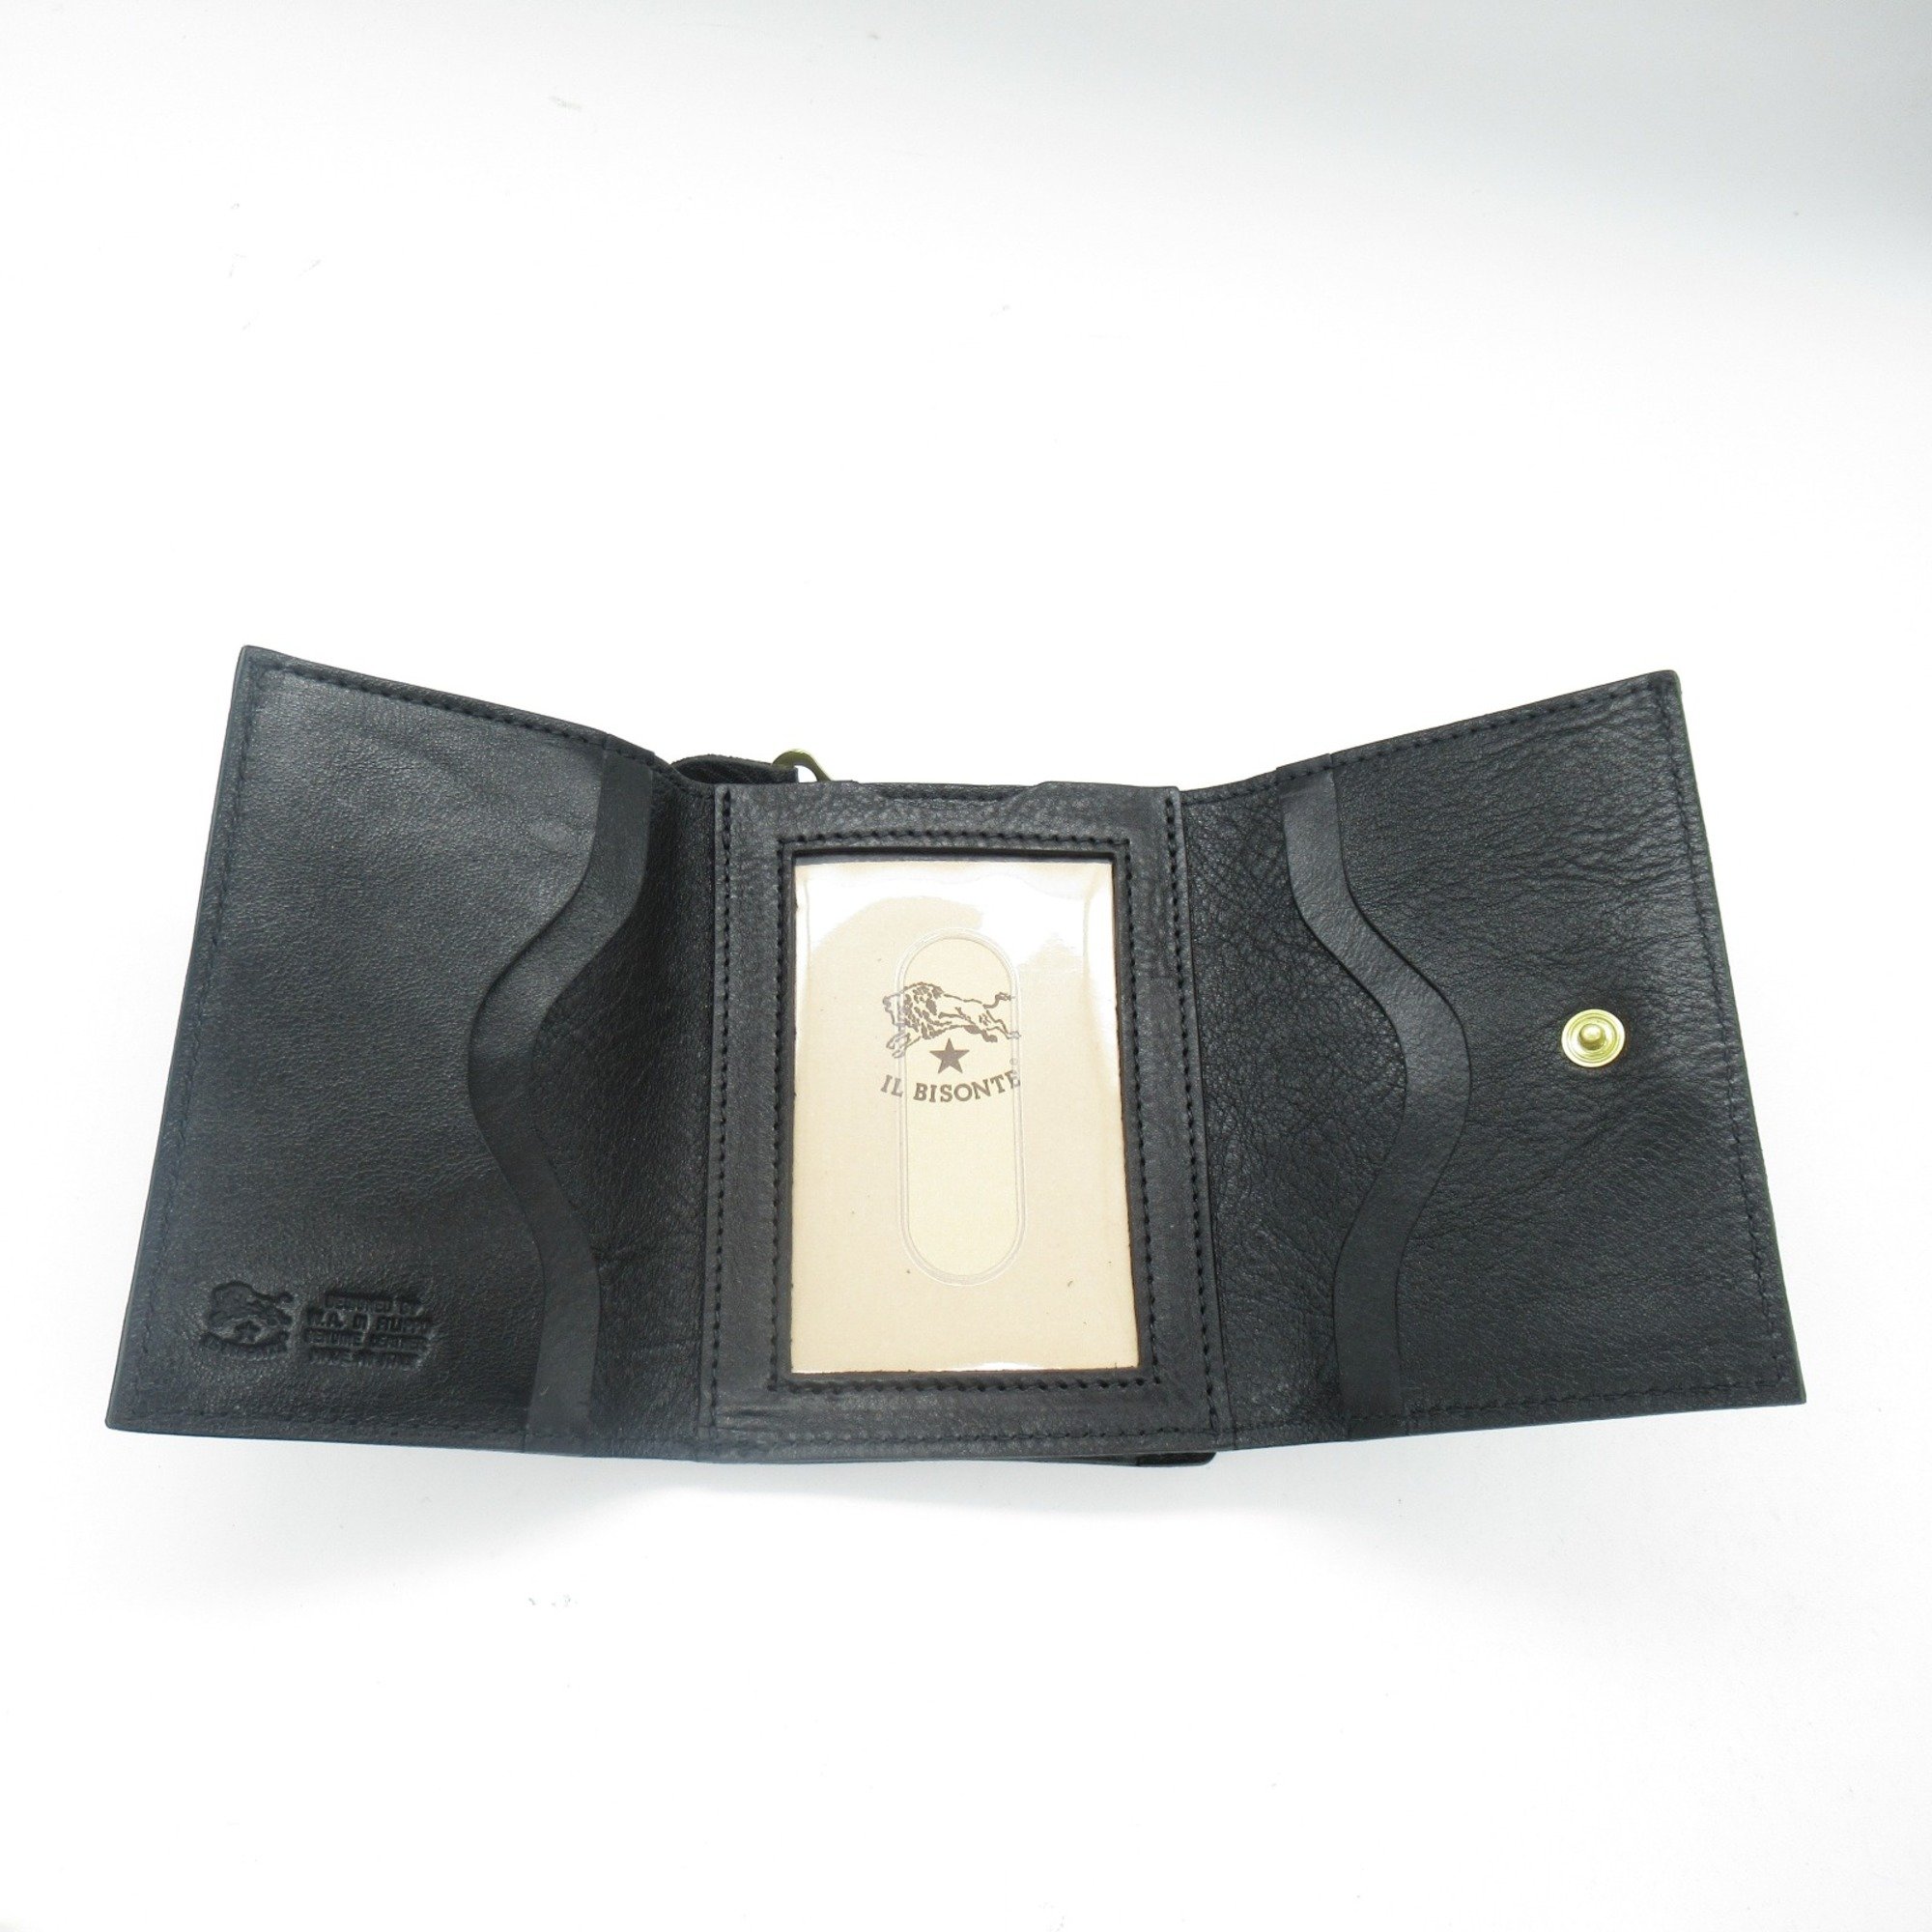 IL BISONTE Three-fold wallet Black leather SMW036BK110